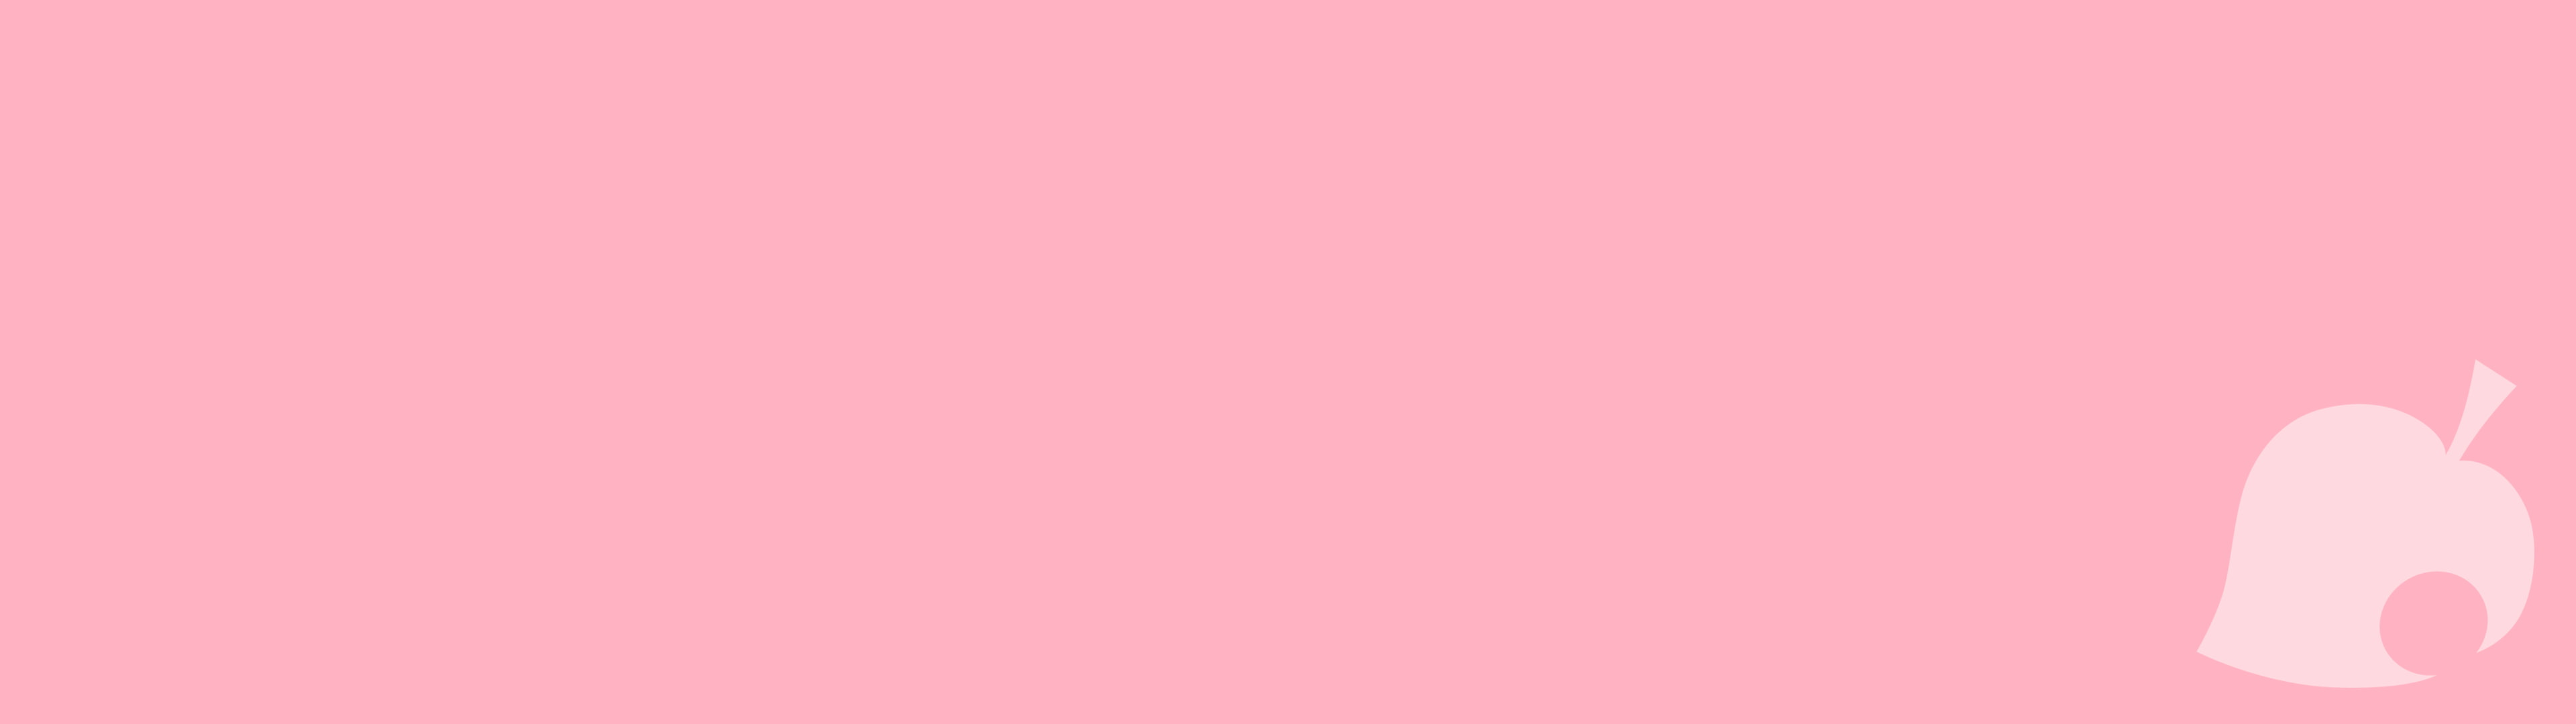 Animal Crossing New Leaf, logo, minimalism, pink, light pink